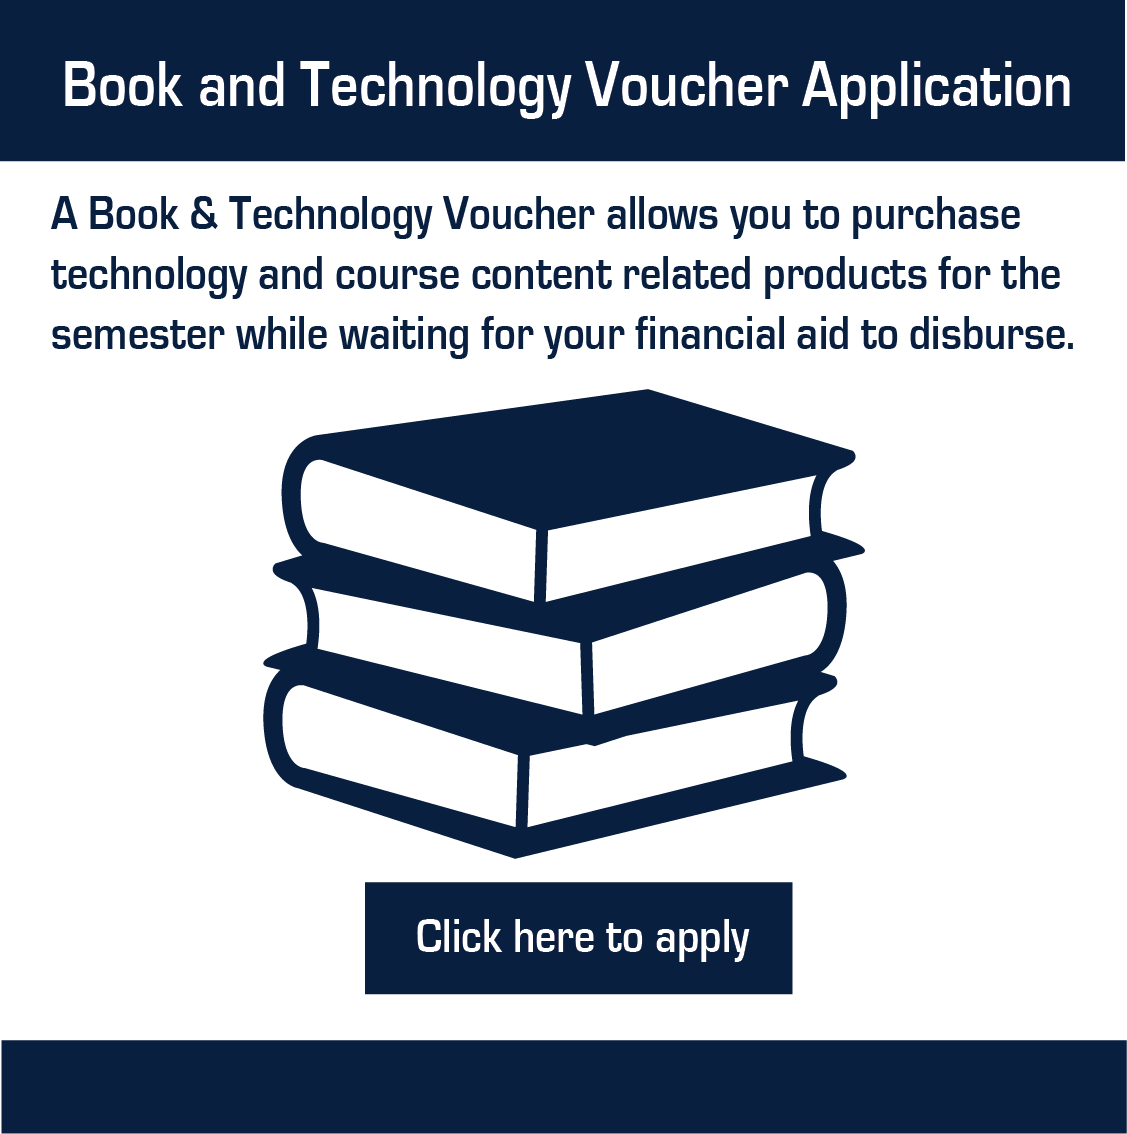 Book and technology voucher application